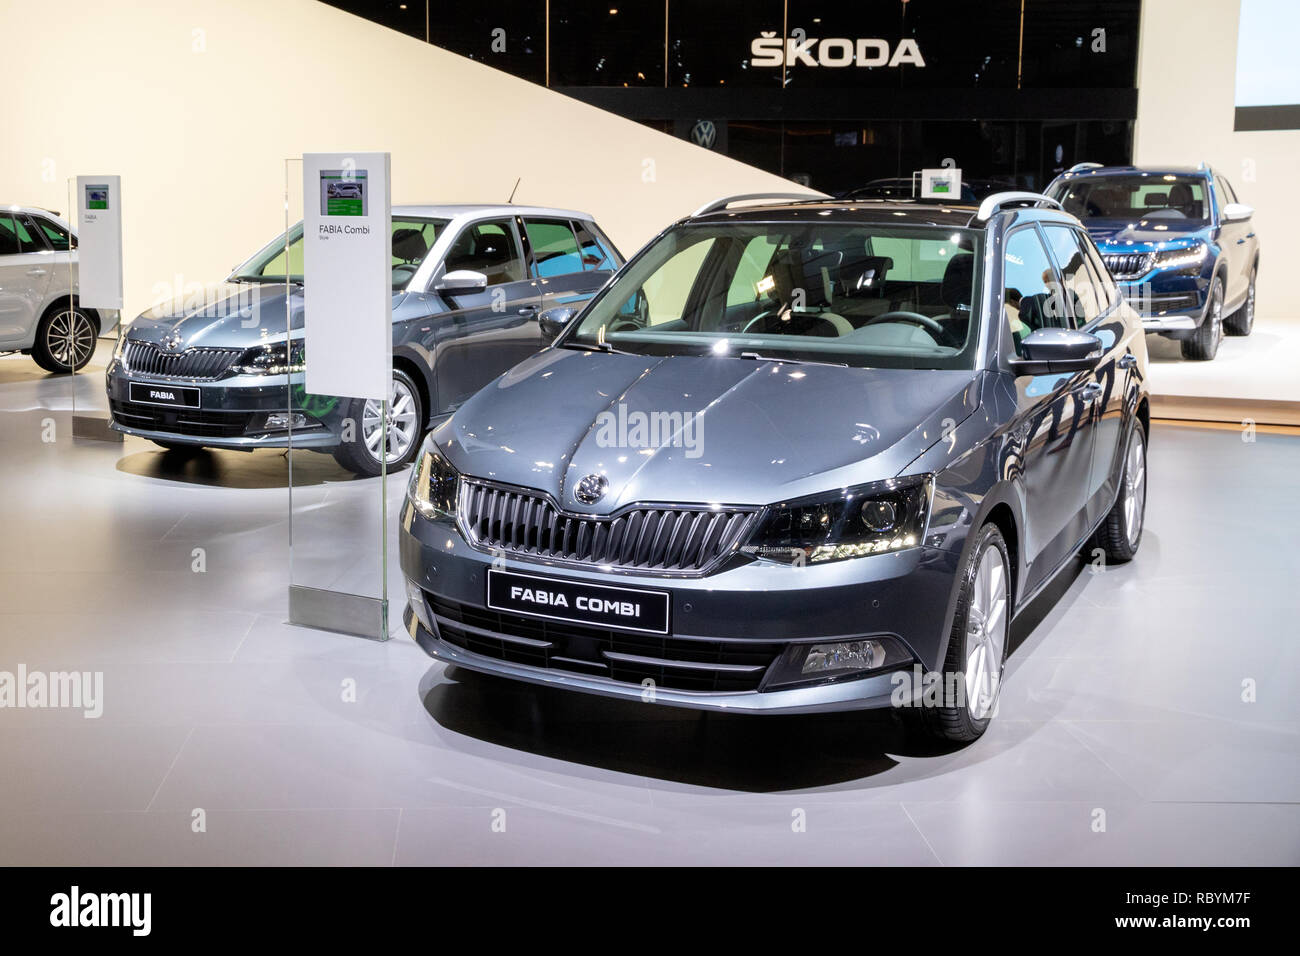 Brüssel - Jan 10, 2018: Skoda Fabia Auto auf dem Automobil-Salon in Brüssel vorgestellt. Stockfoto